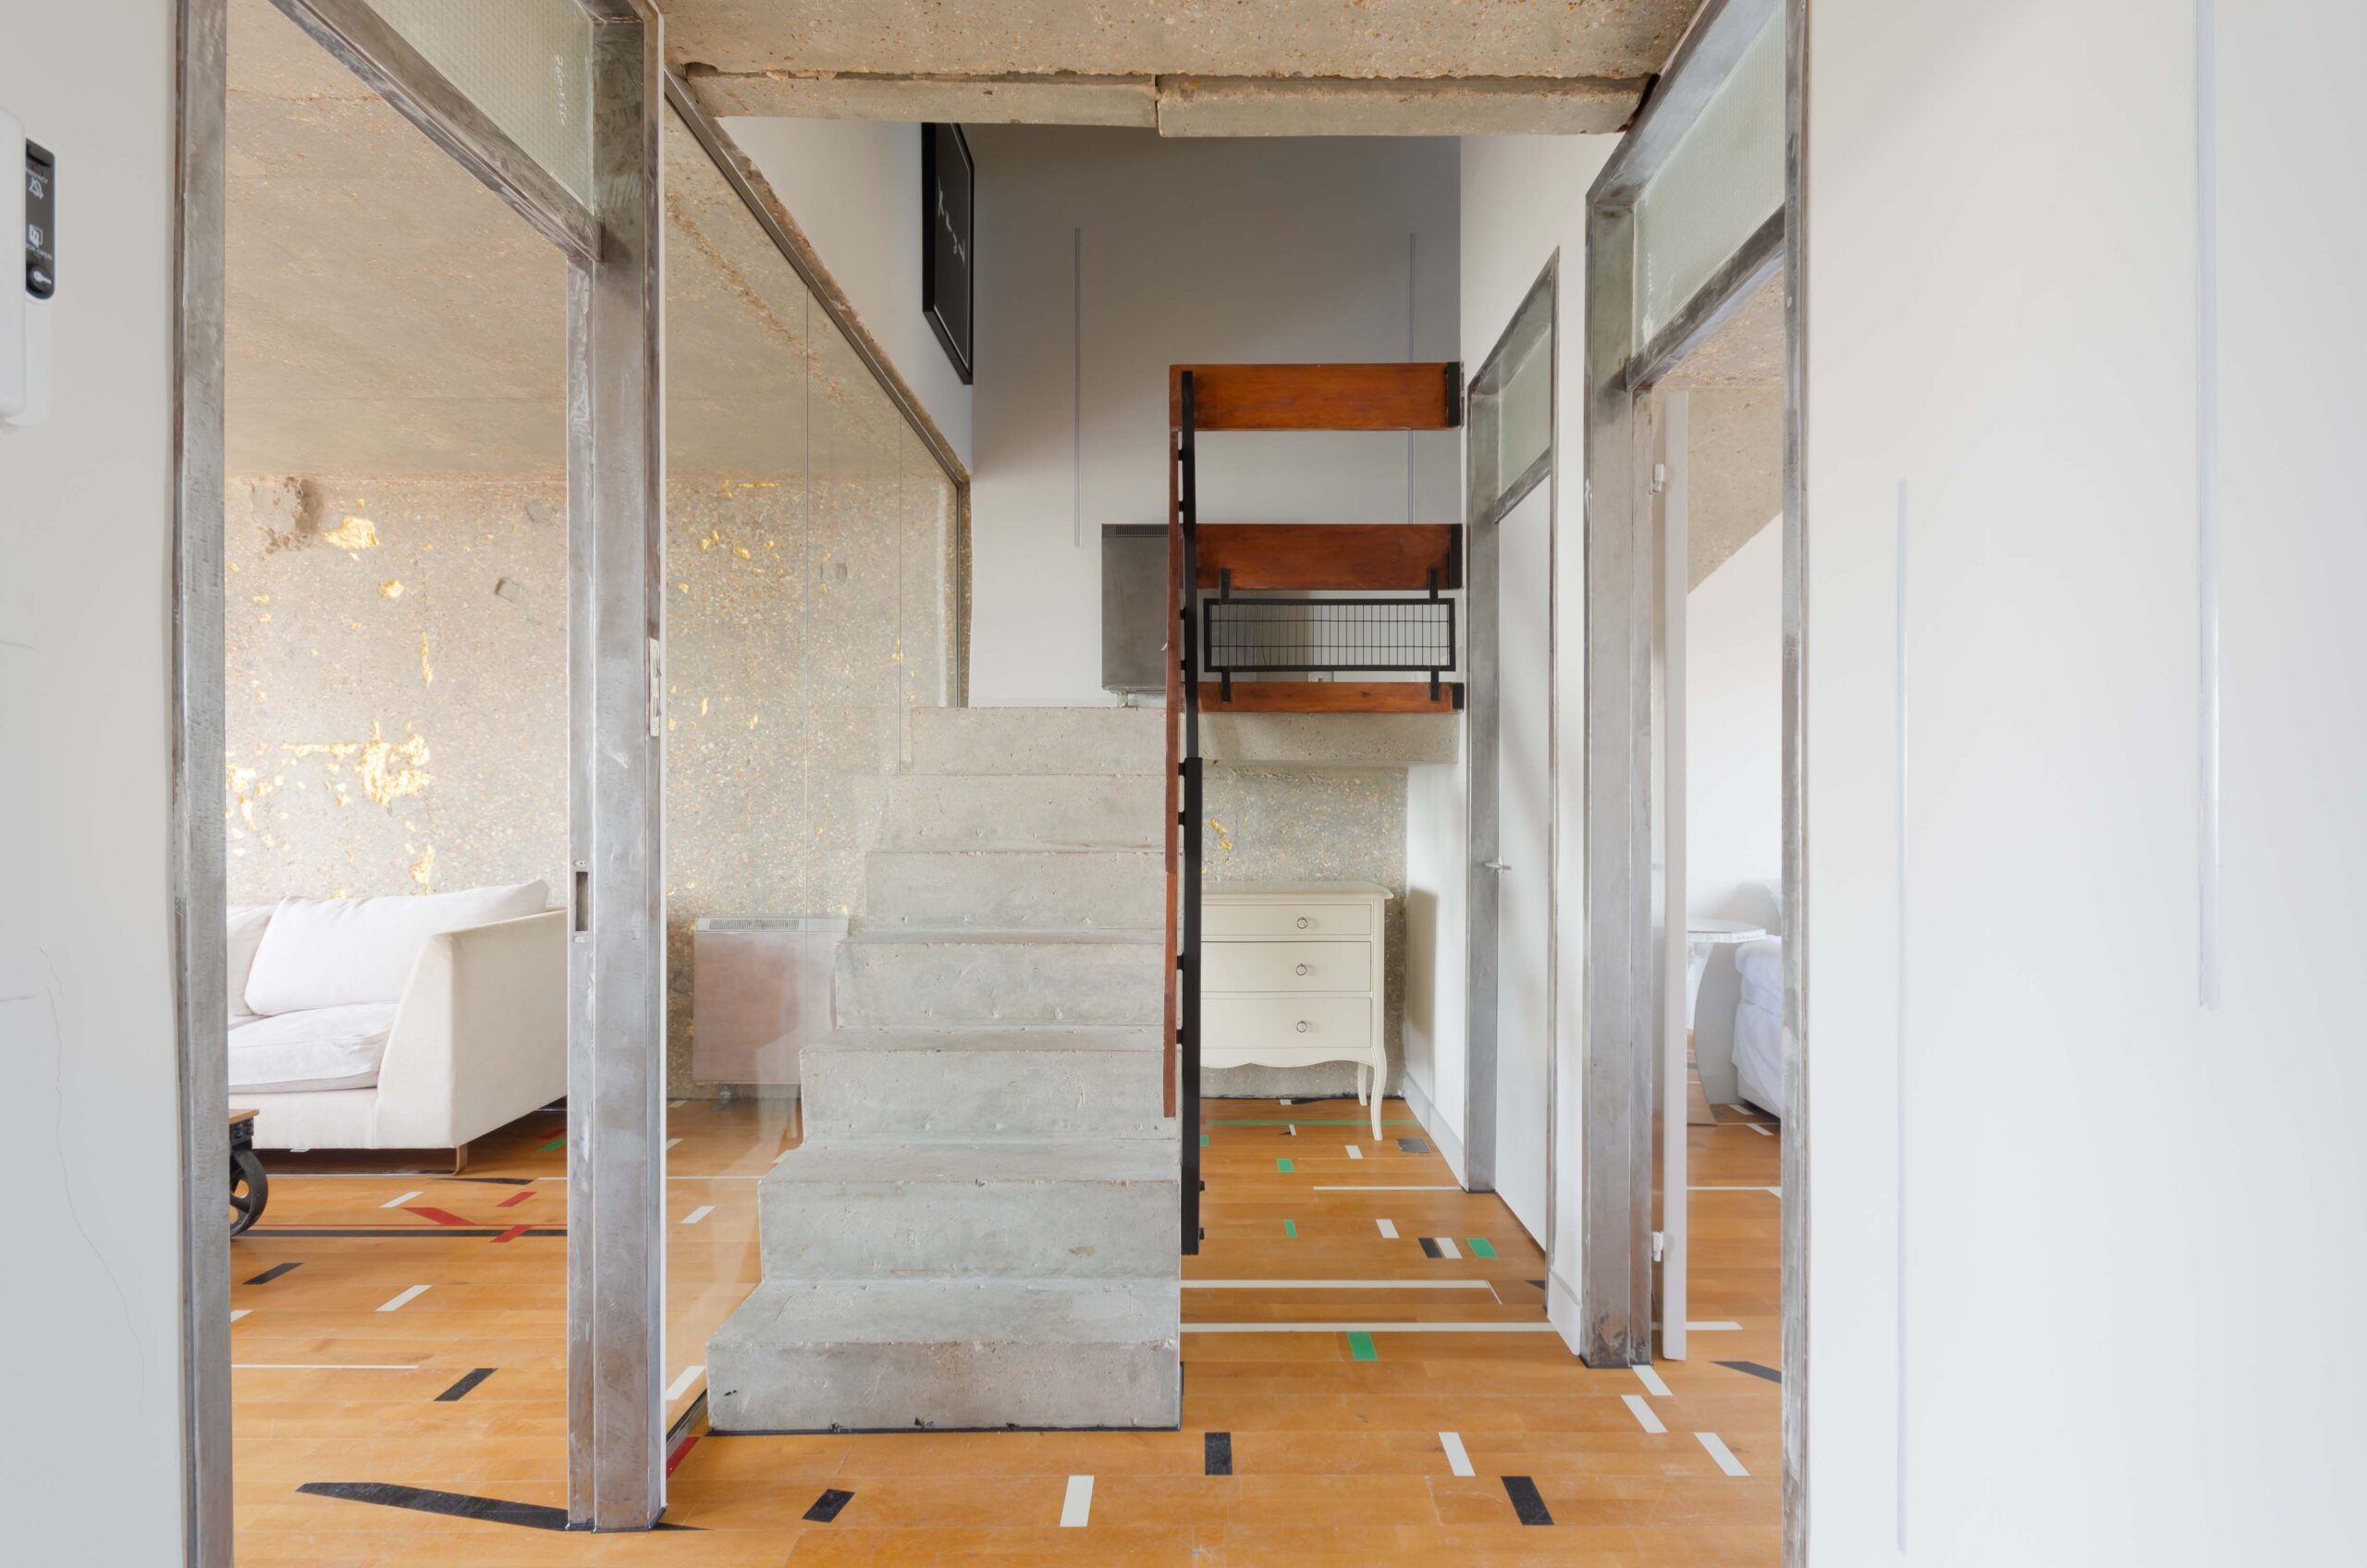 For Rent: Trellick Tower North Kensington W10 brutalist interior design